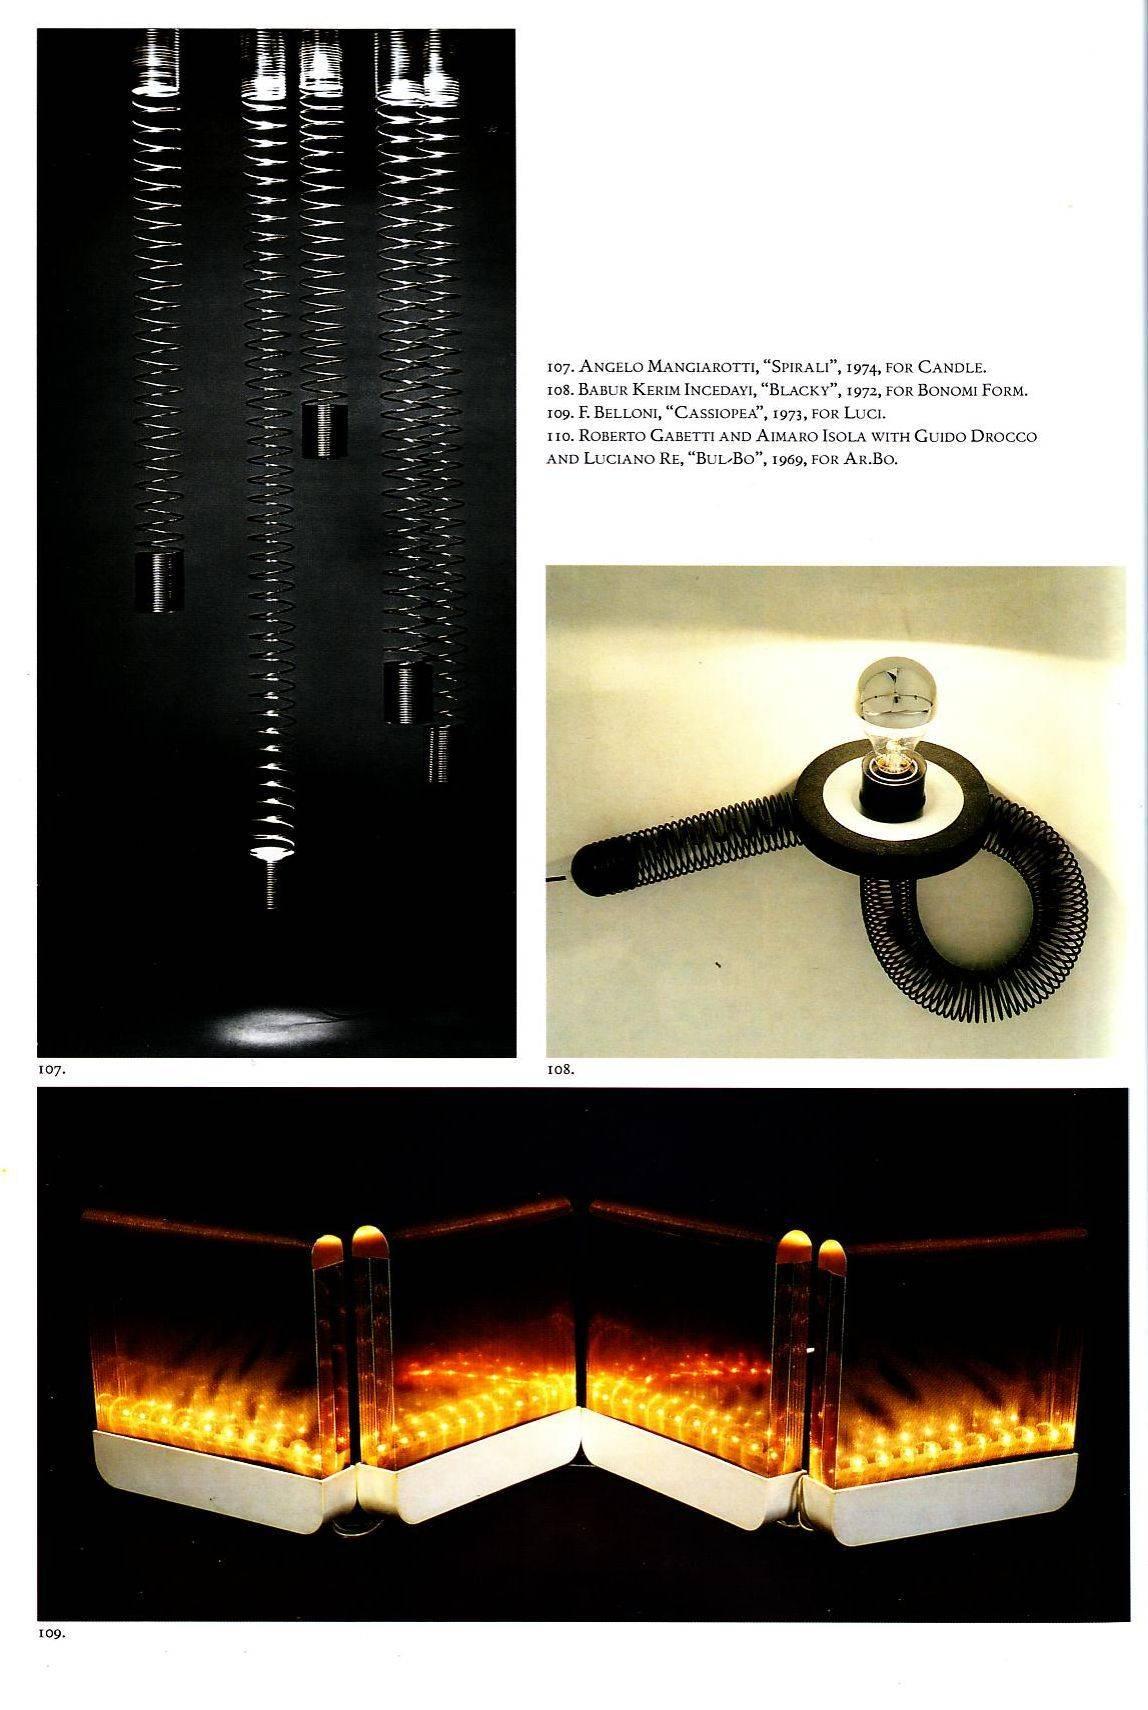 Minimalist Rare Avant Garde 'Blacky' Lamps Babur Kerim Incedayi for Bonomi Form, Italy 1972